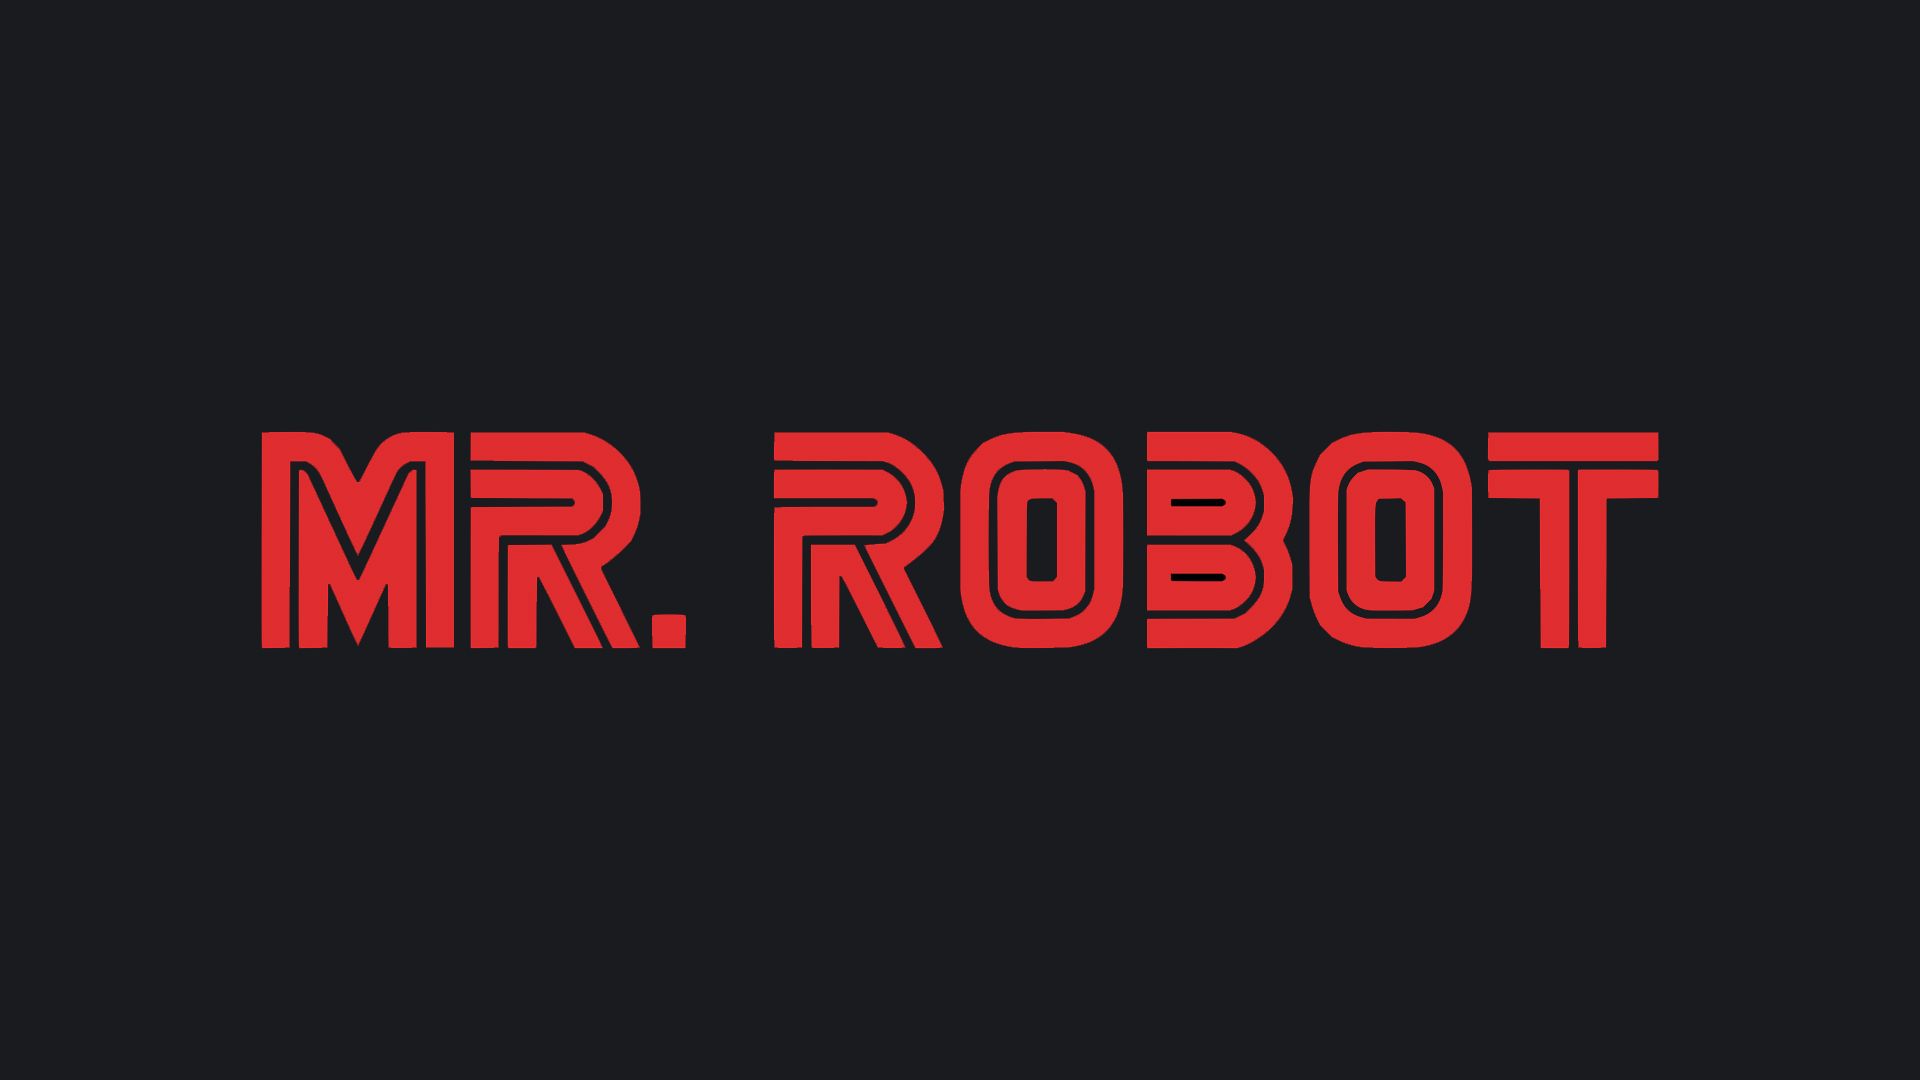 Mr. Robot Fan wallpaper i created today at work. : r/MrRobot